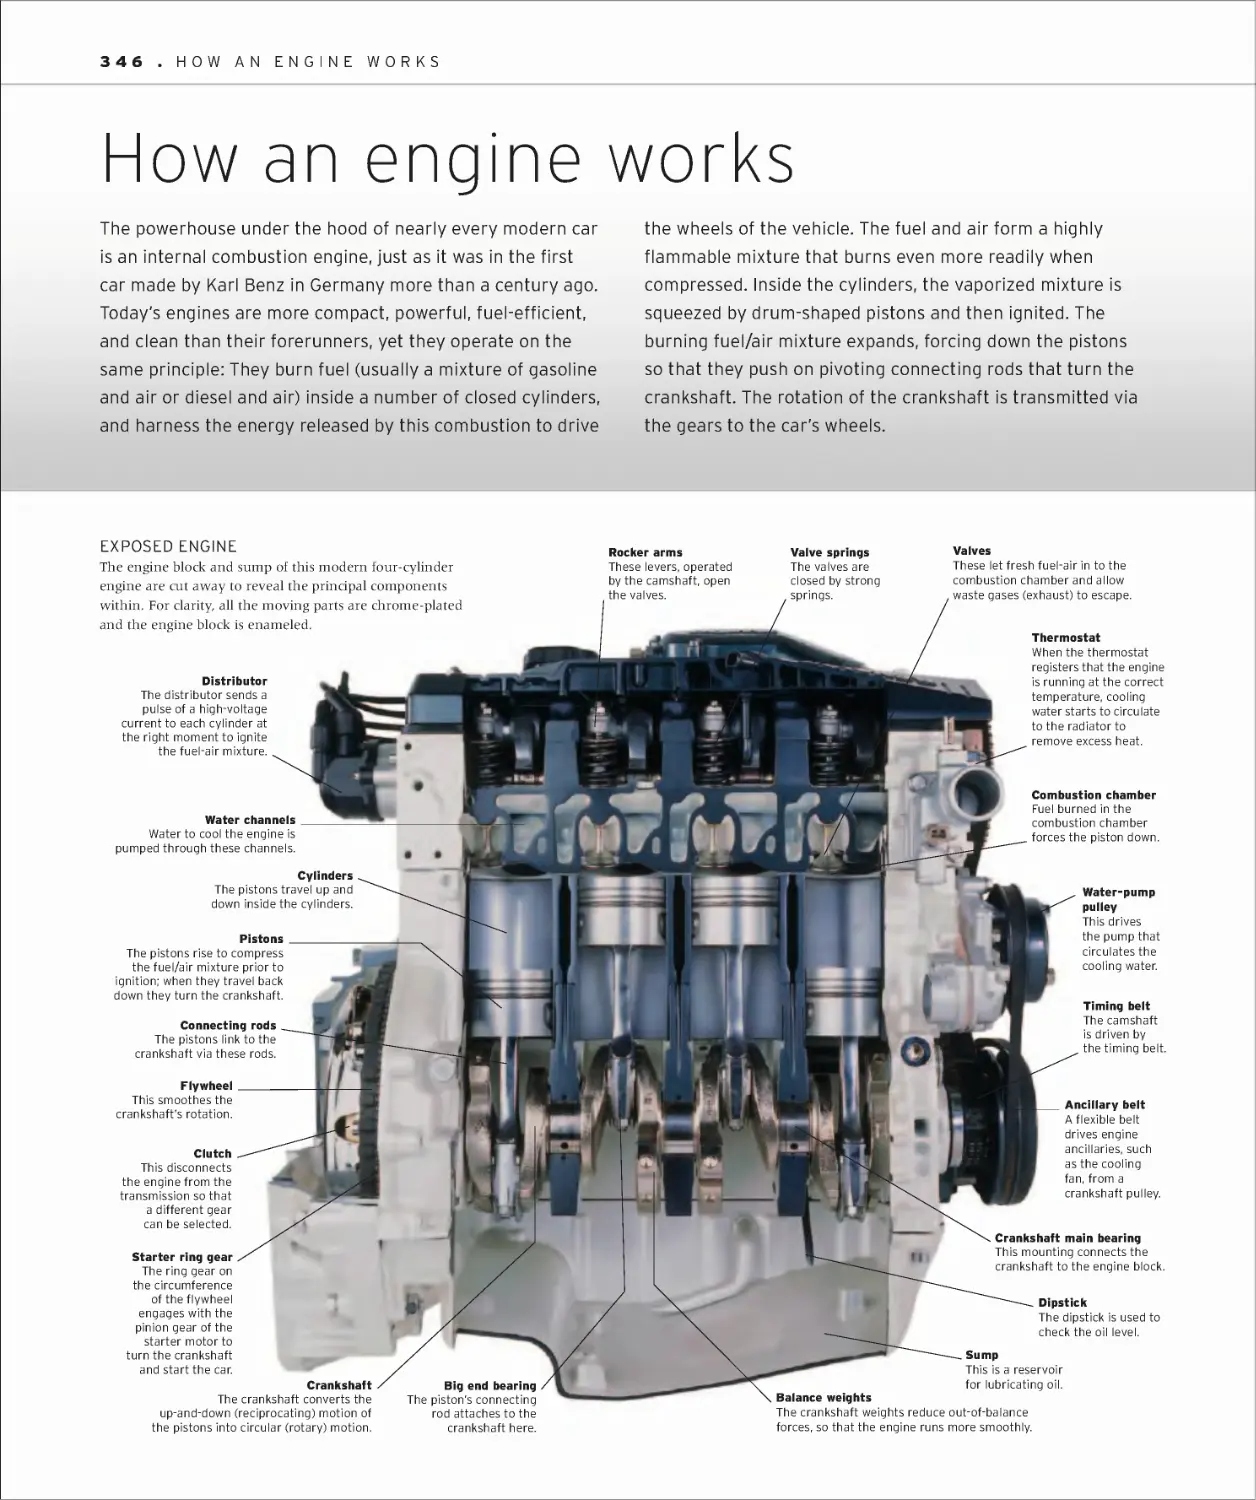 HOW AN ENGINE WORKS 346